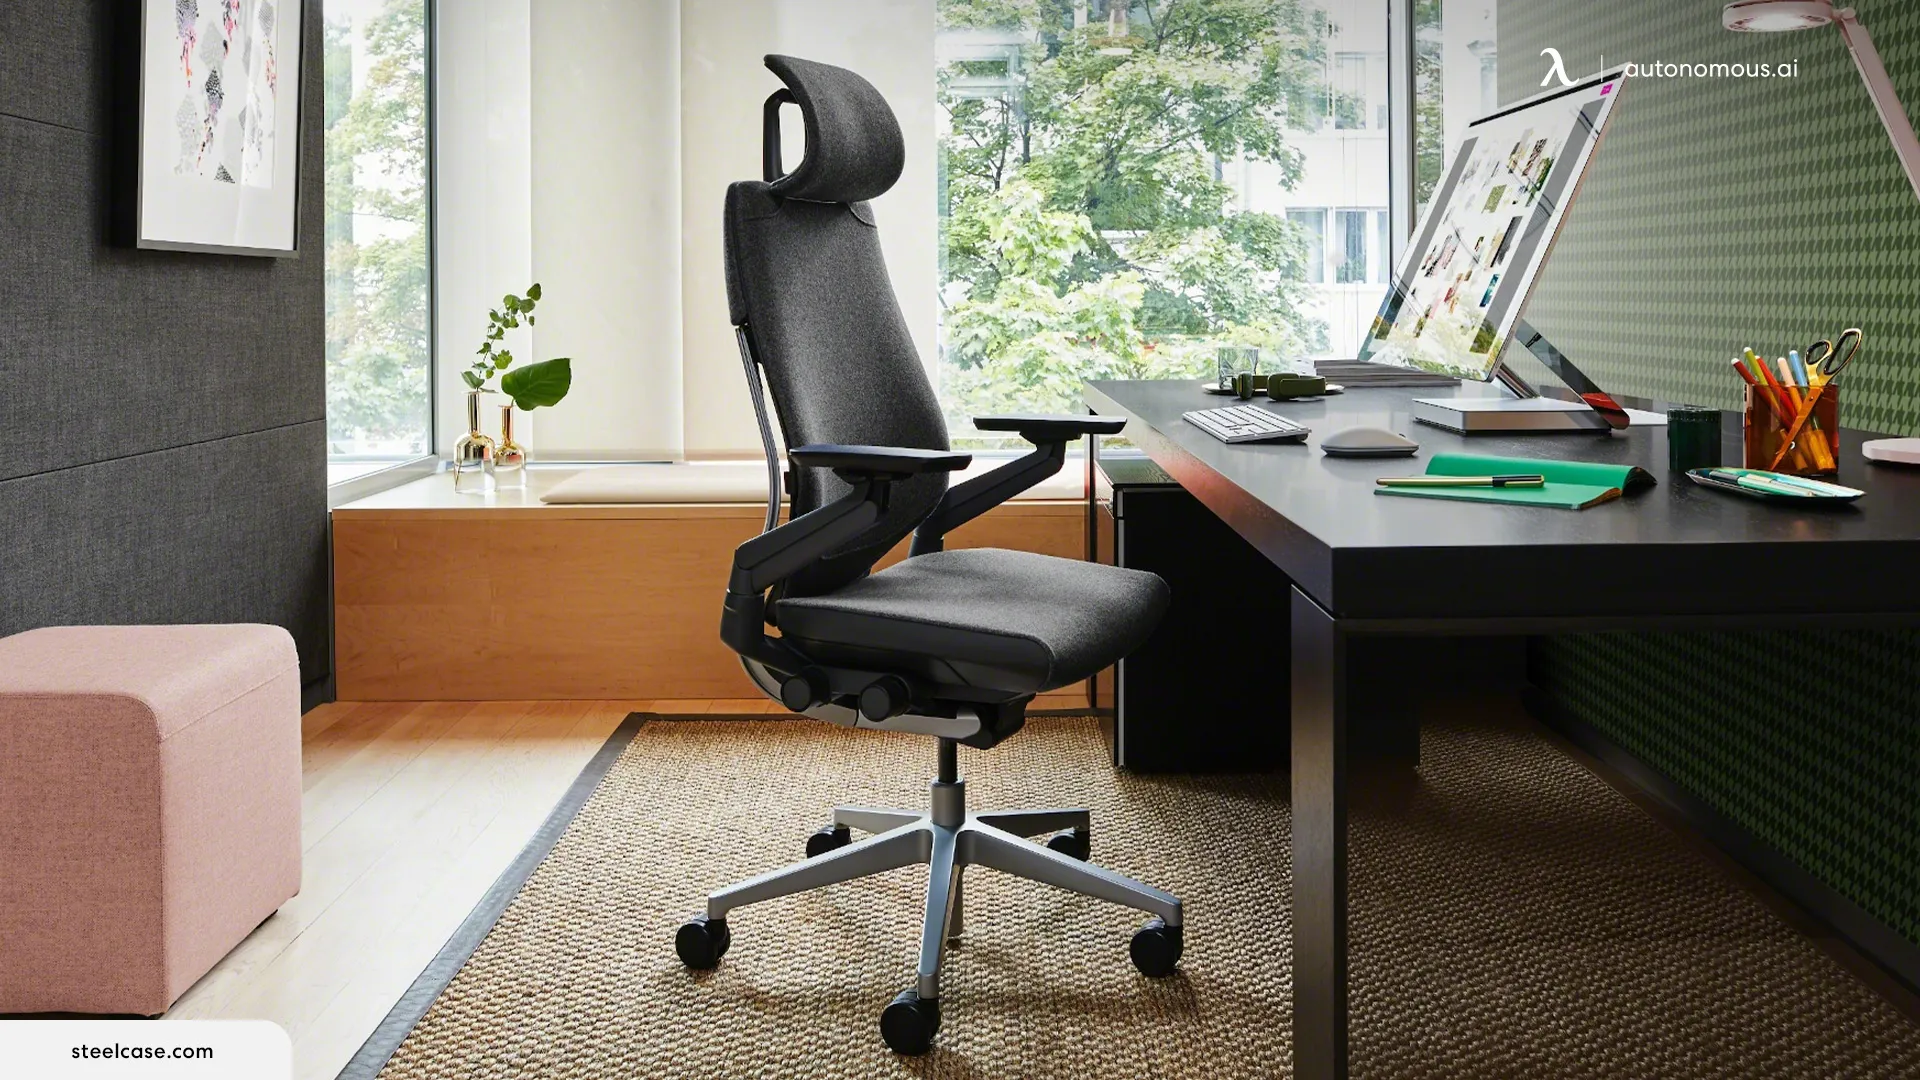 Best desk chair for upper back pain - Steelcase